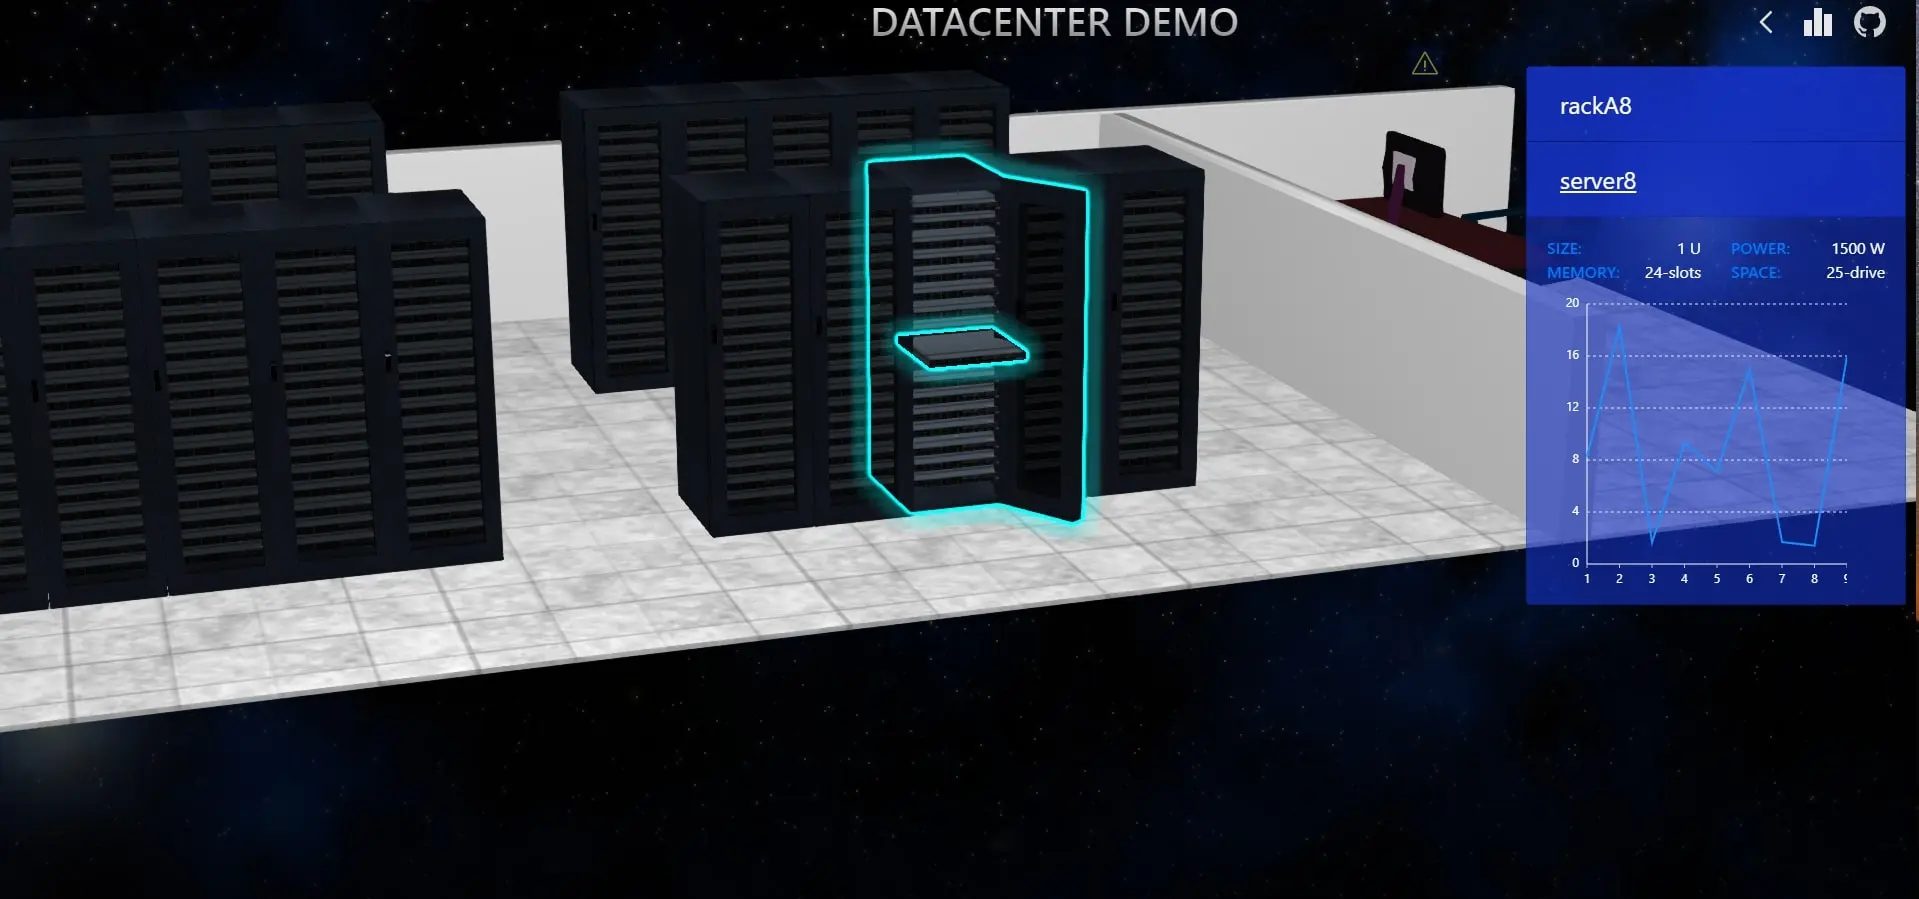 iot-visualizaiton-datacenter